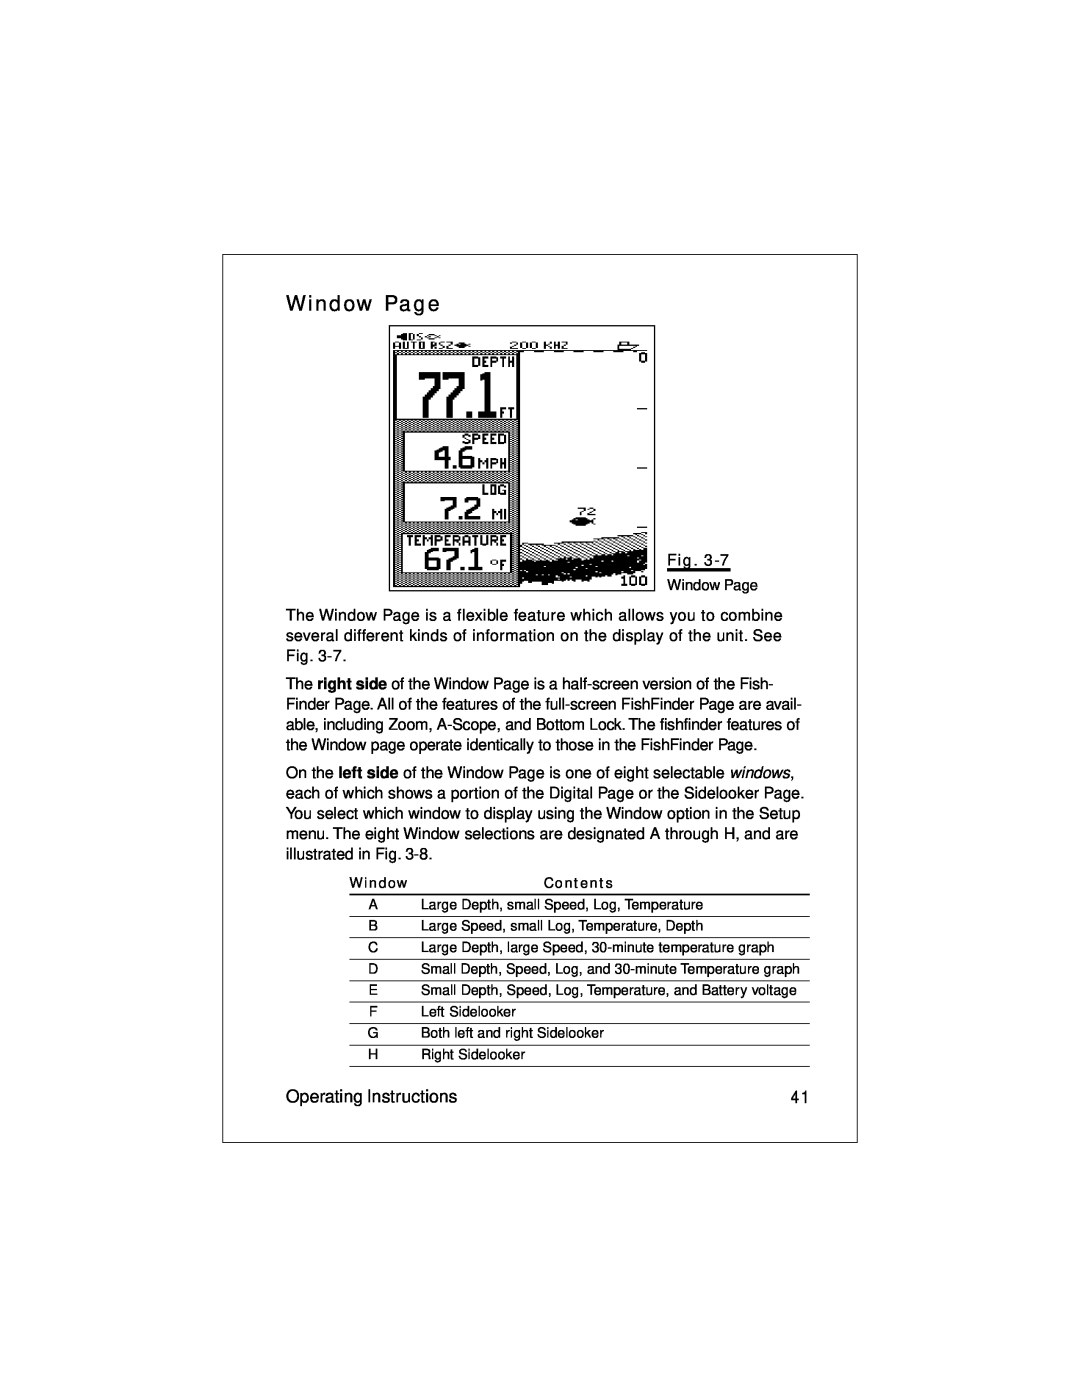 Raymarine L470 instruction manual Window Page, Operating Instructions, WindowContents 